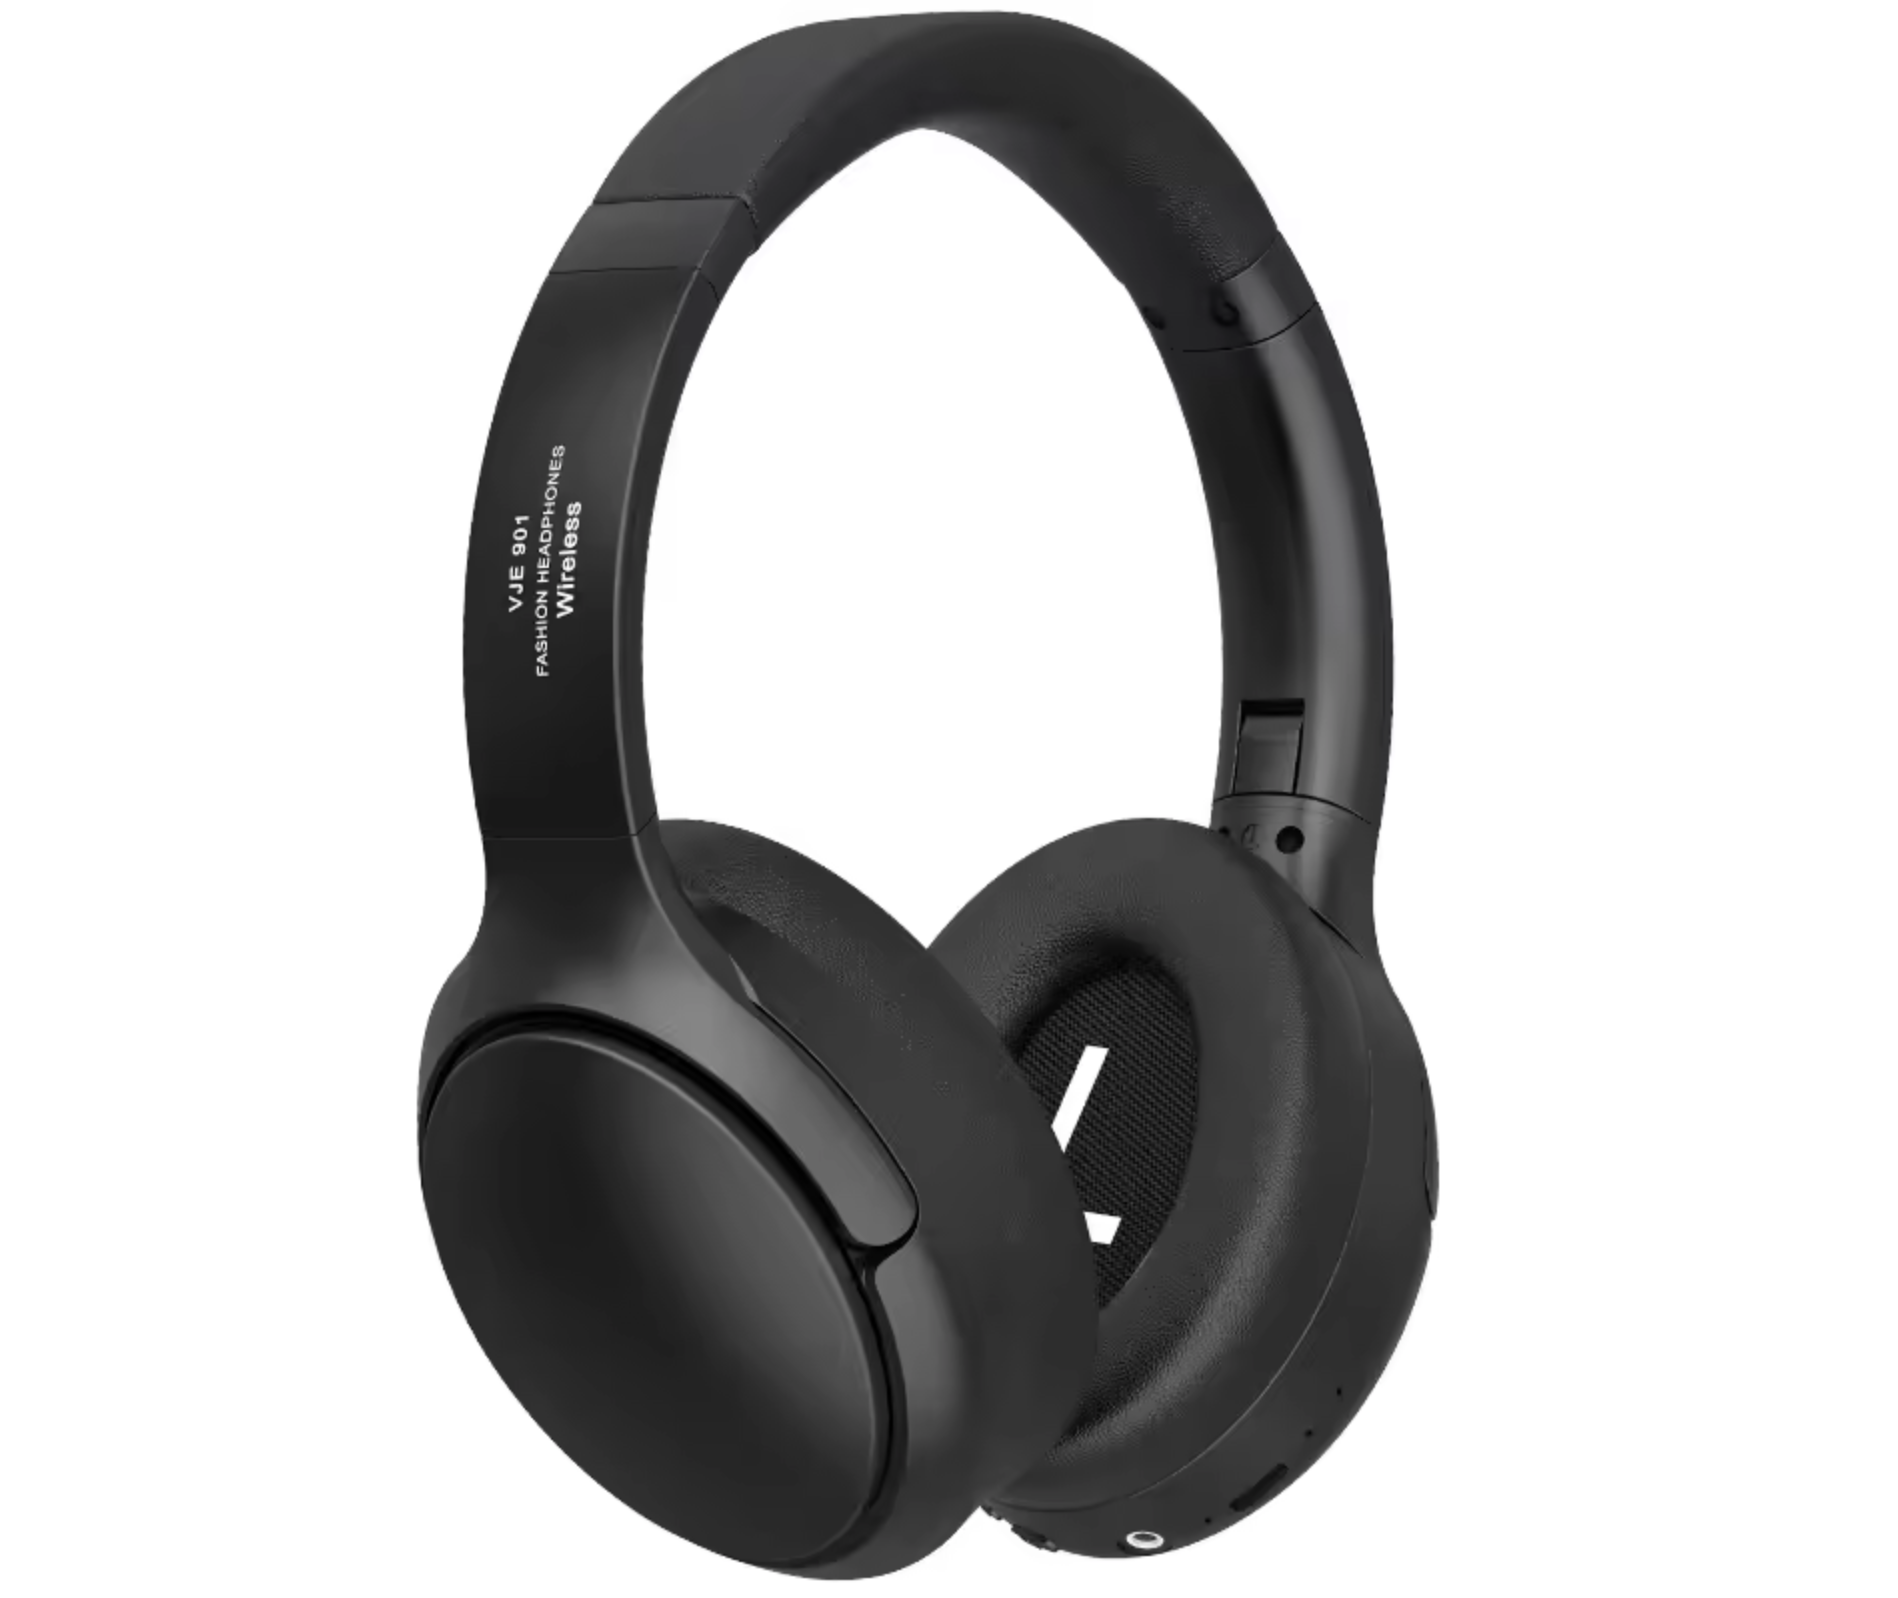 Metallic black silver headset stereo sound wireless headphone